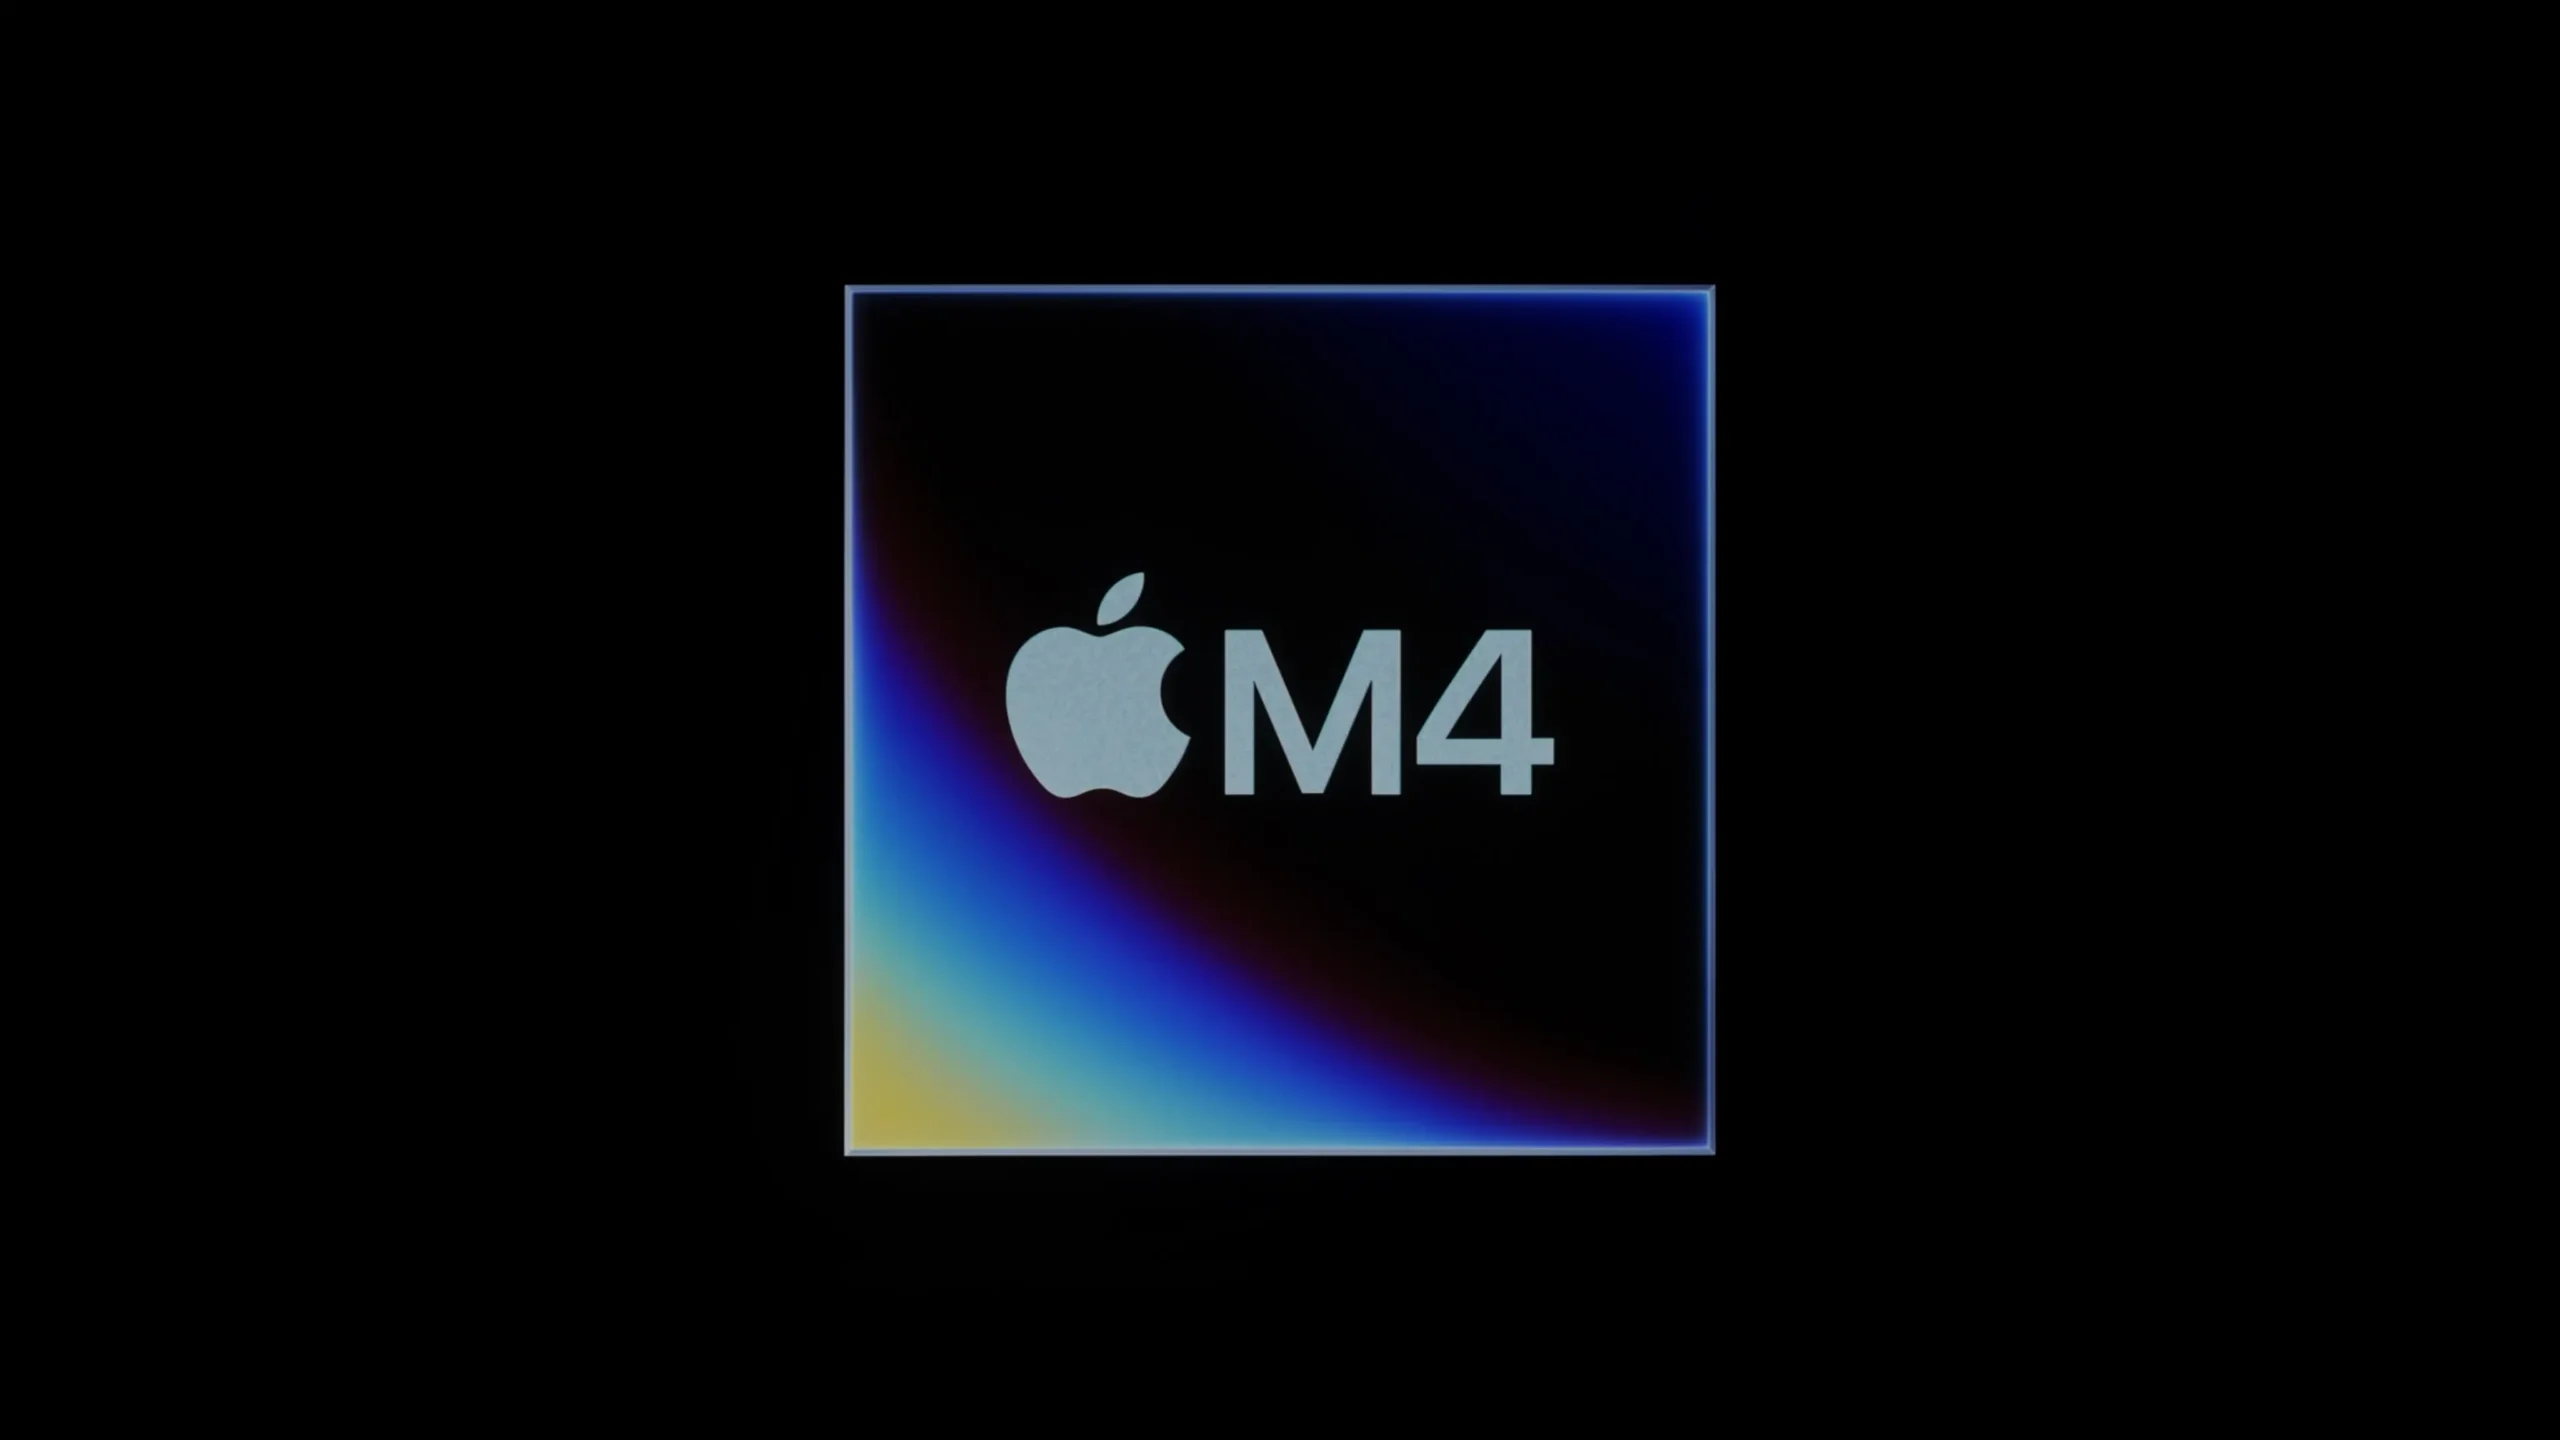 The Apple M4 Chip